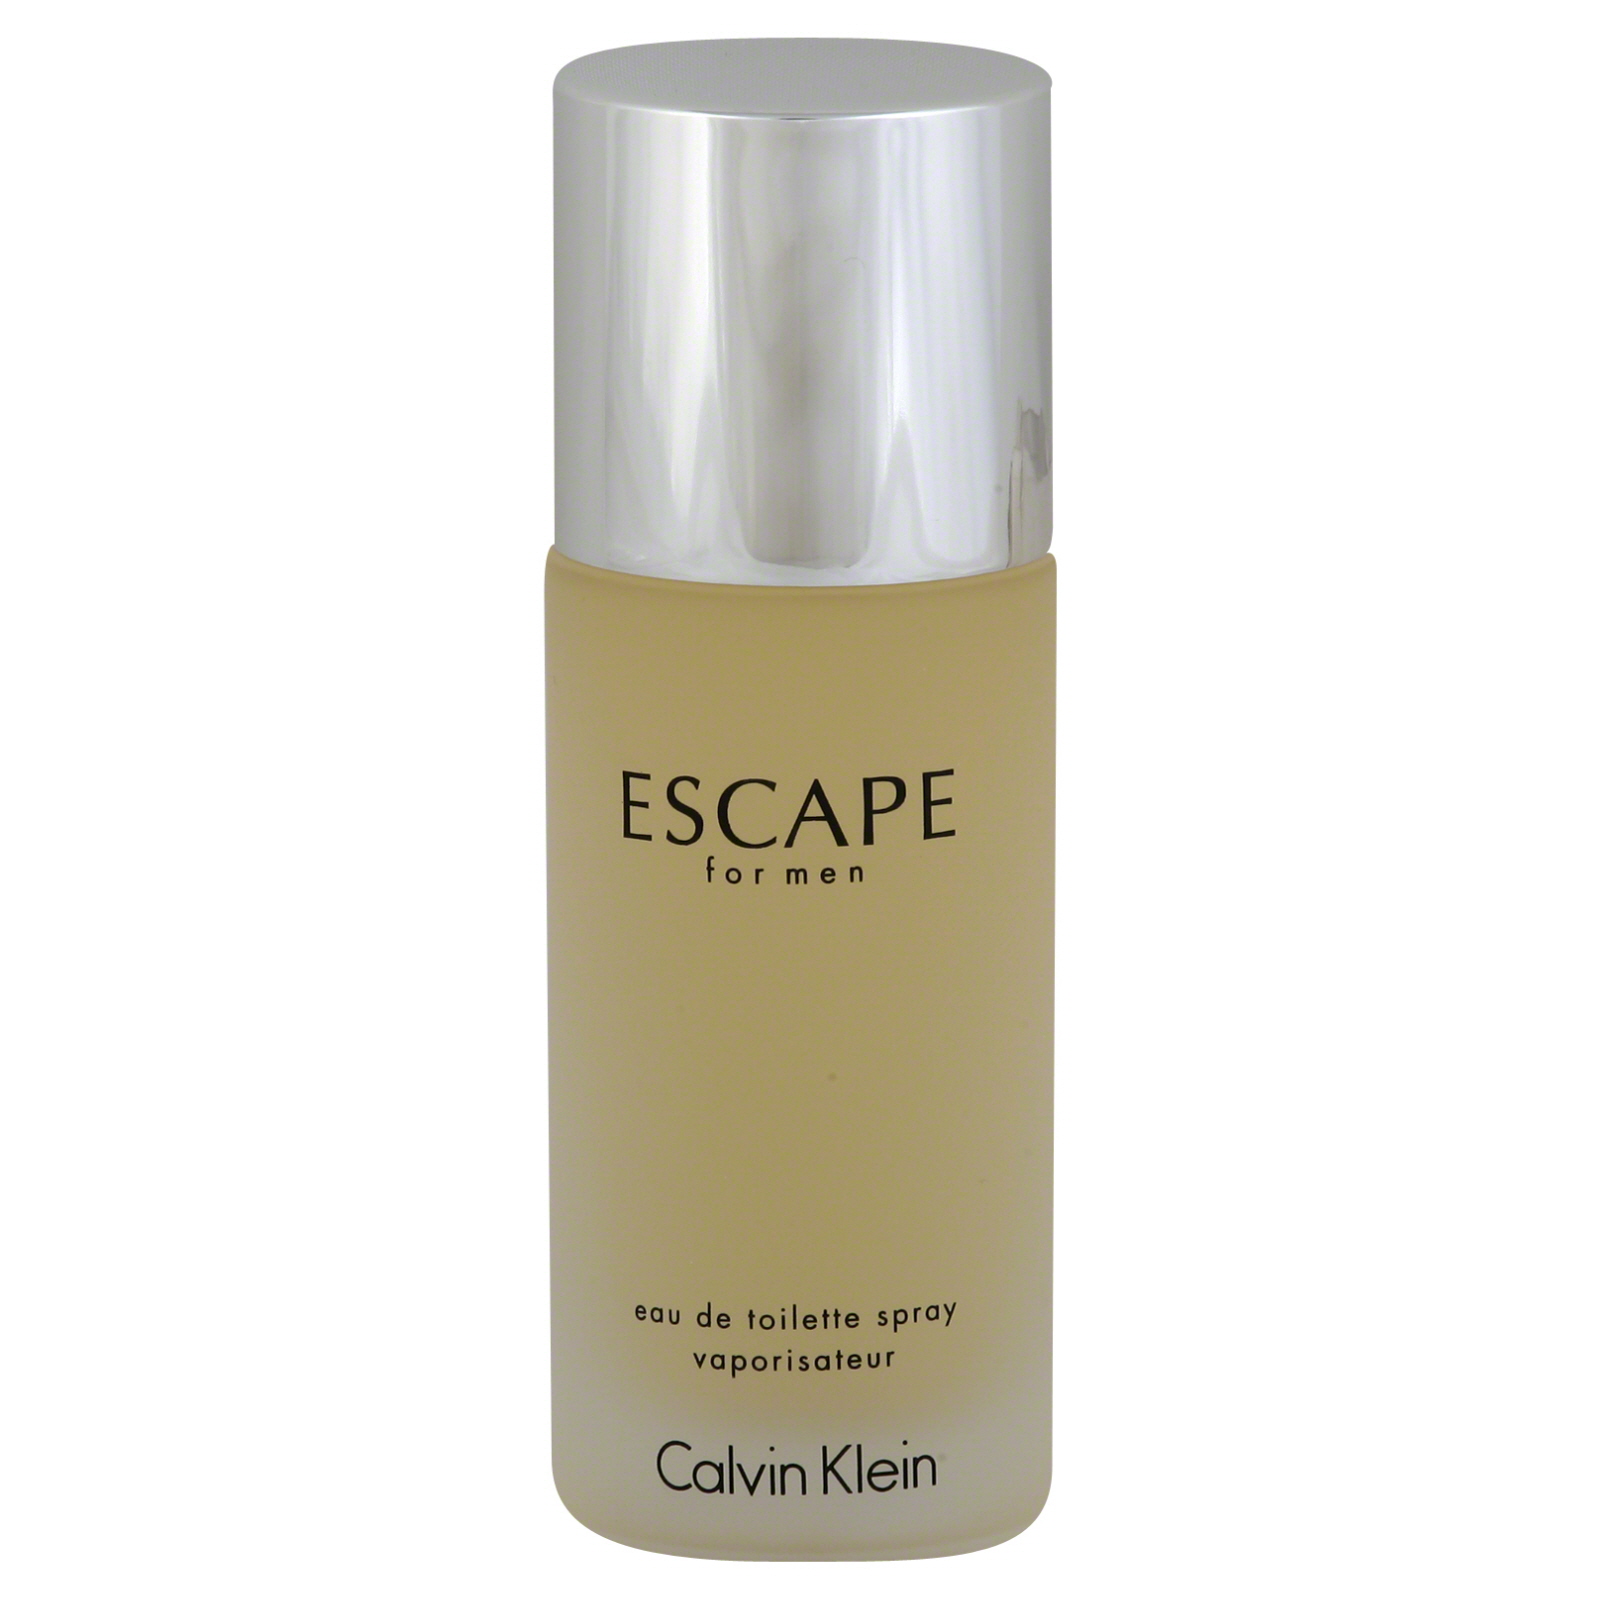 Escape For Men 3.4 oz EDT spray